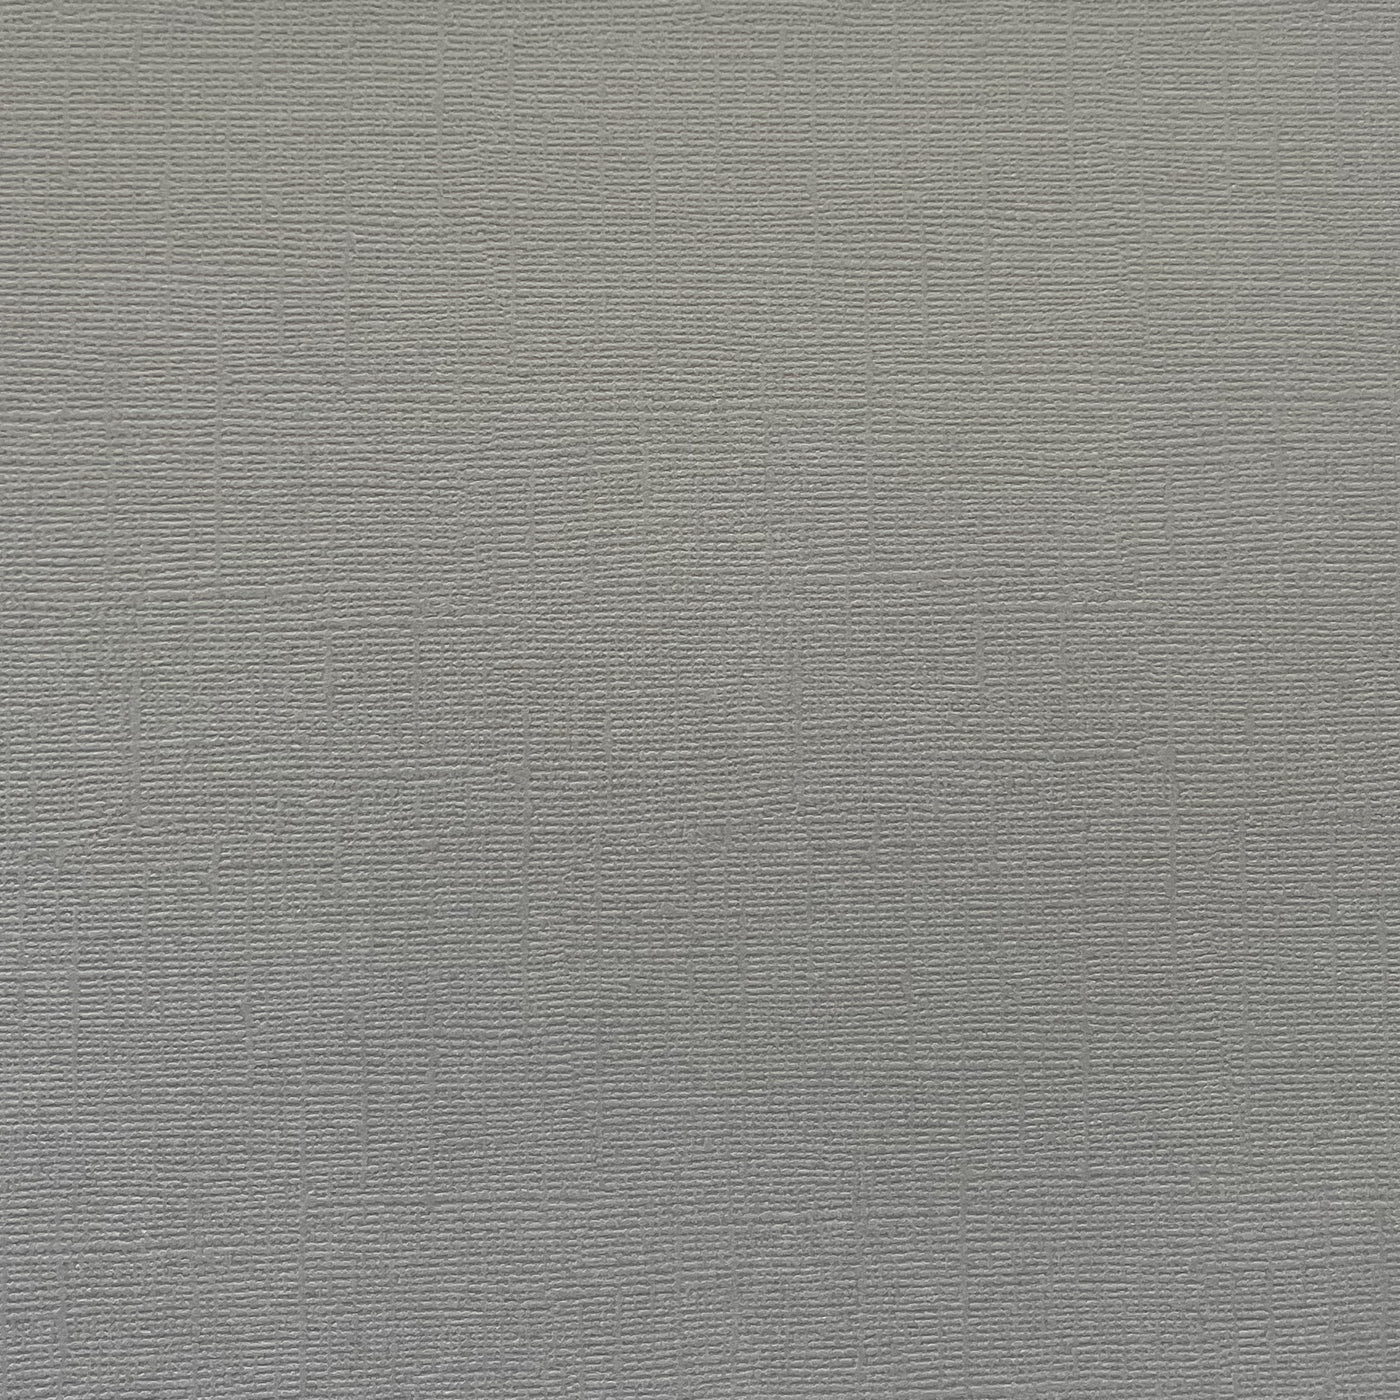 CEMENT - Textured Medium Gray 12x12 Cardstock - Encore Paper